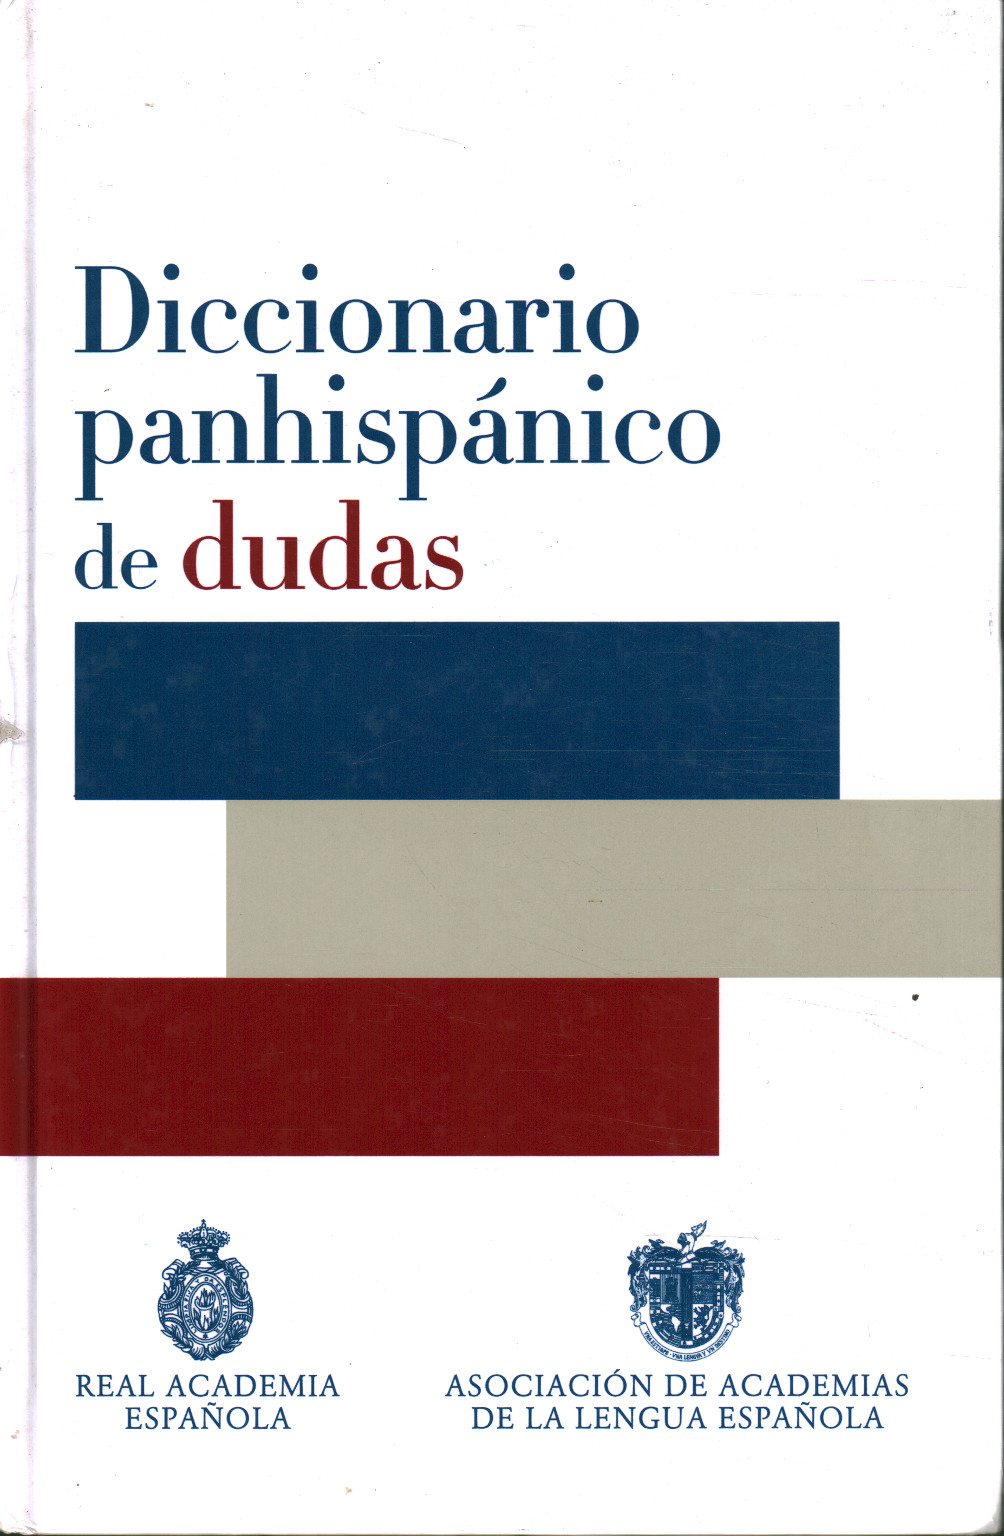 Panhispánico-Diktatur von Dudas